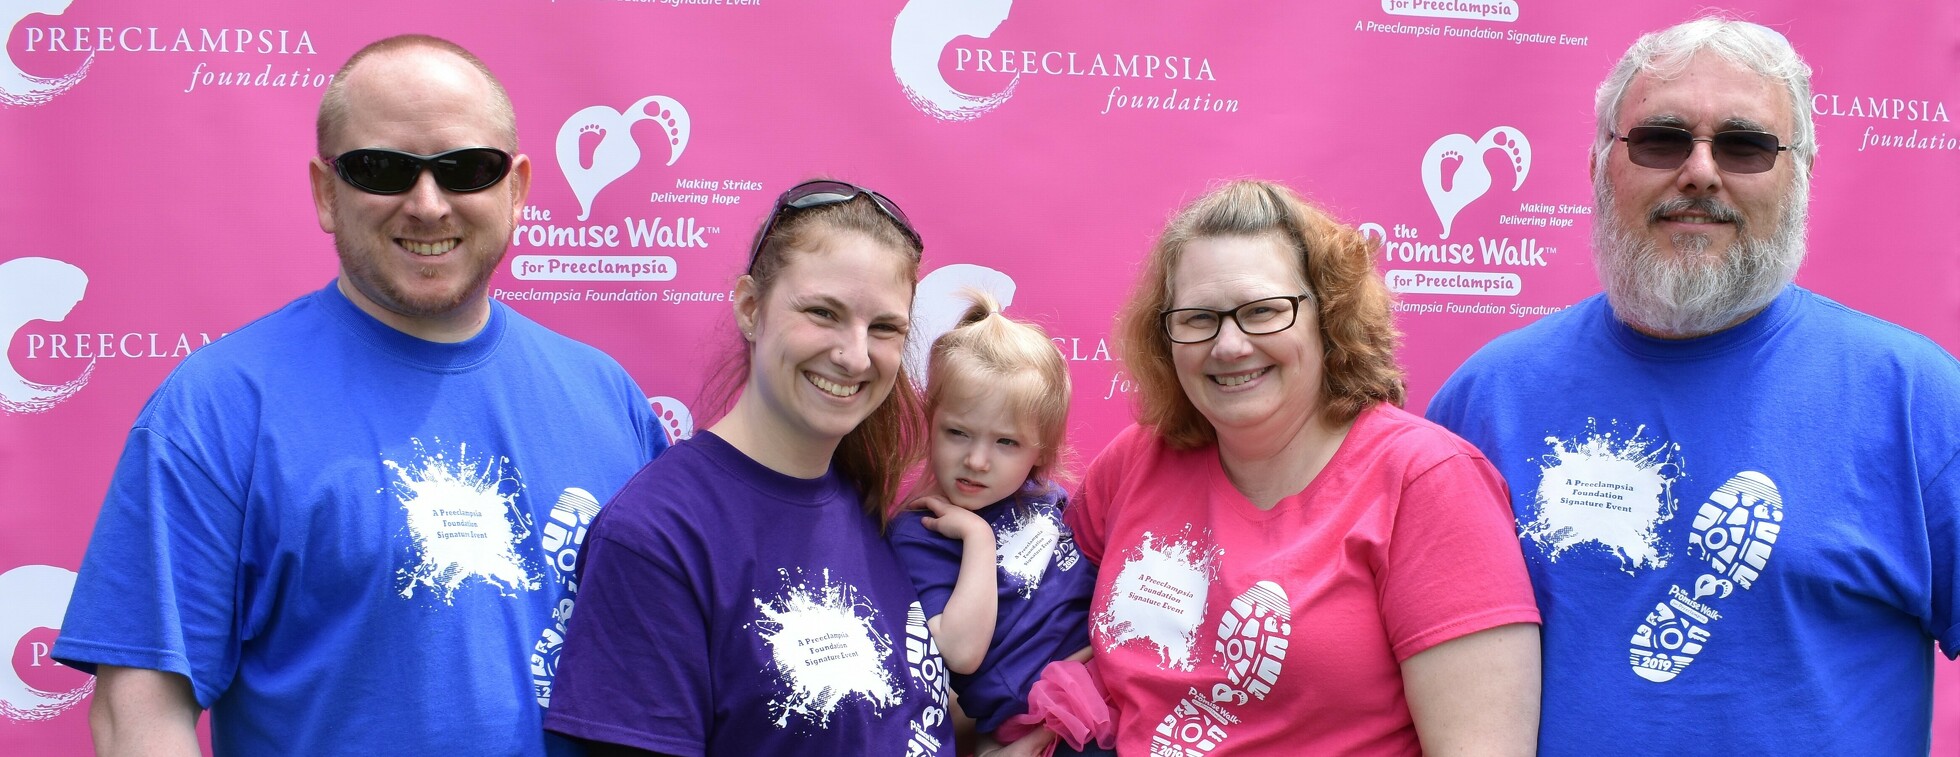 Lehigh Valley Promise Walk for Preeclampsia